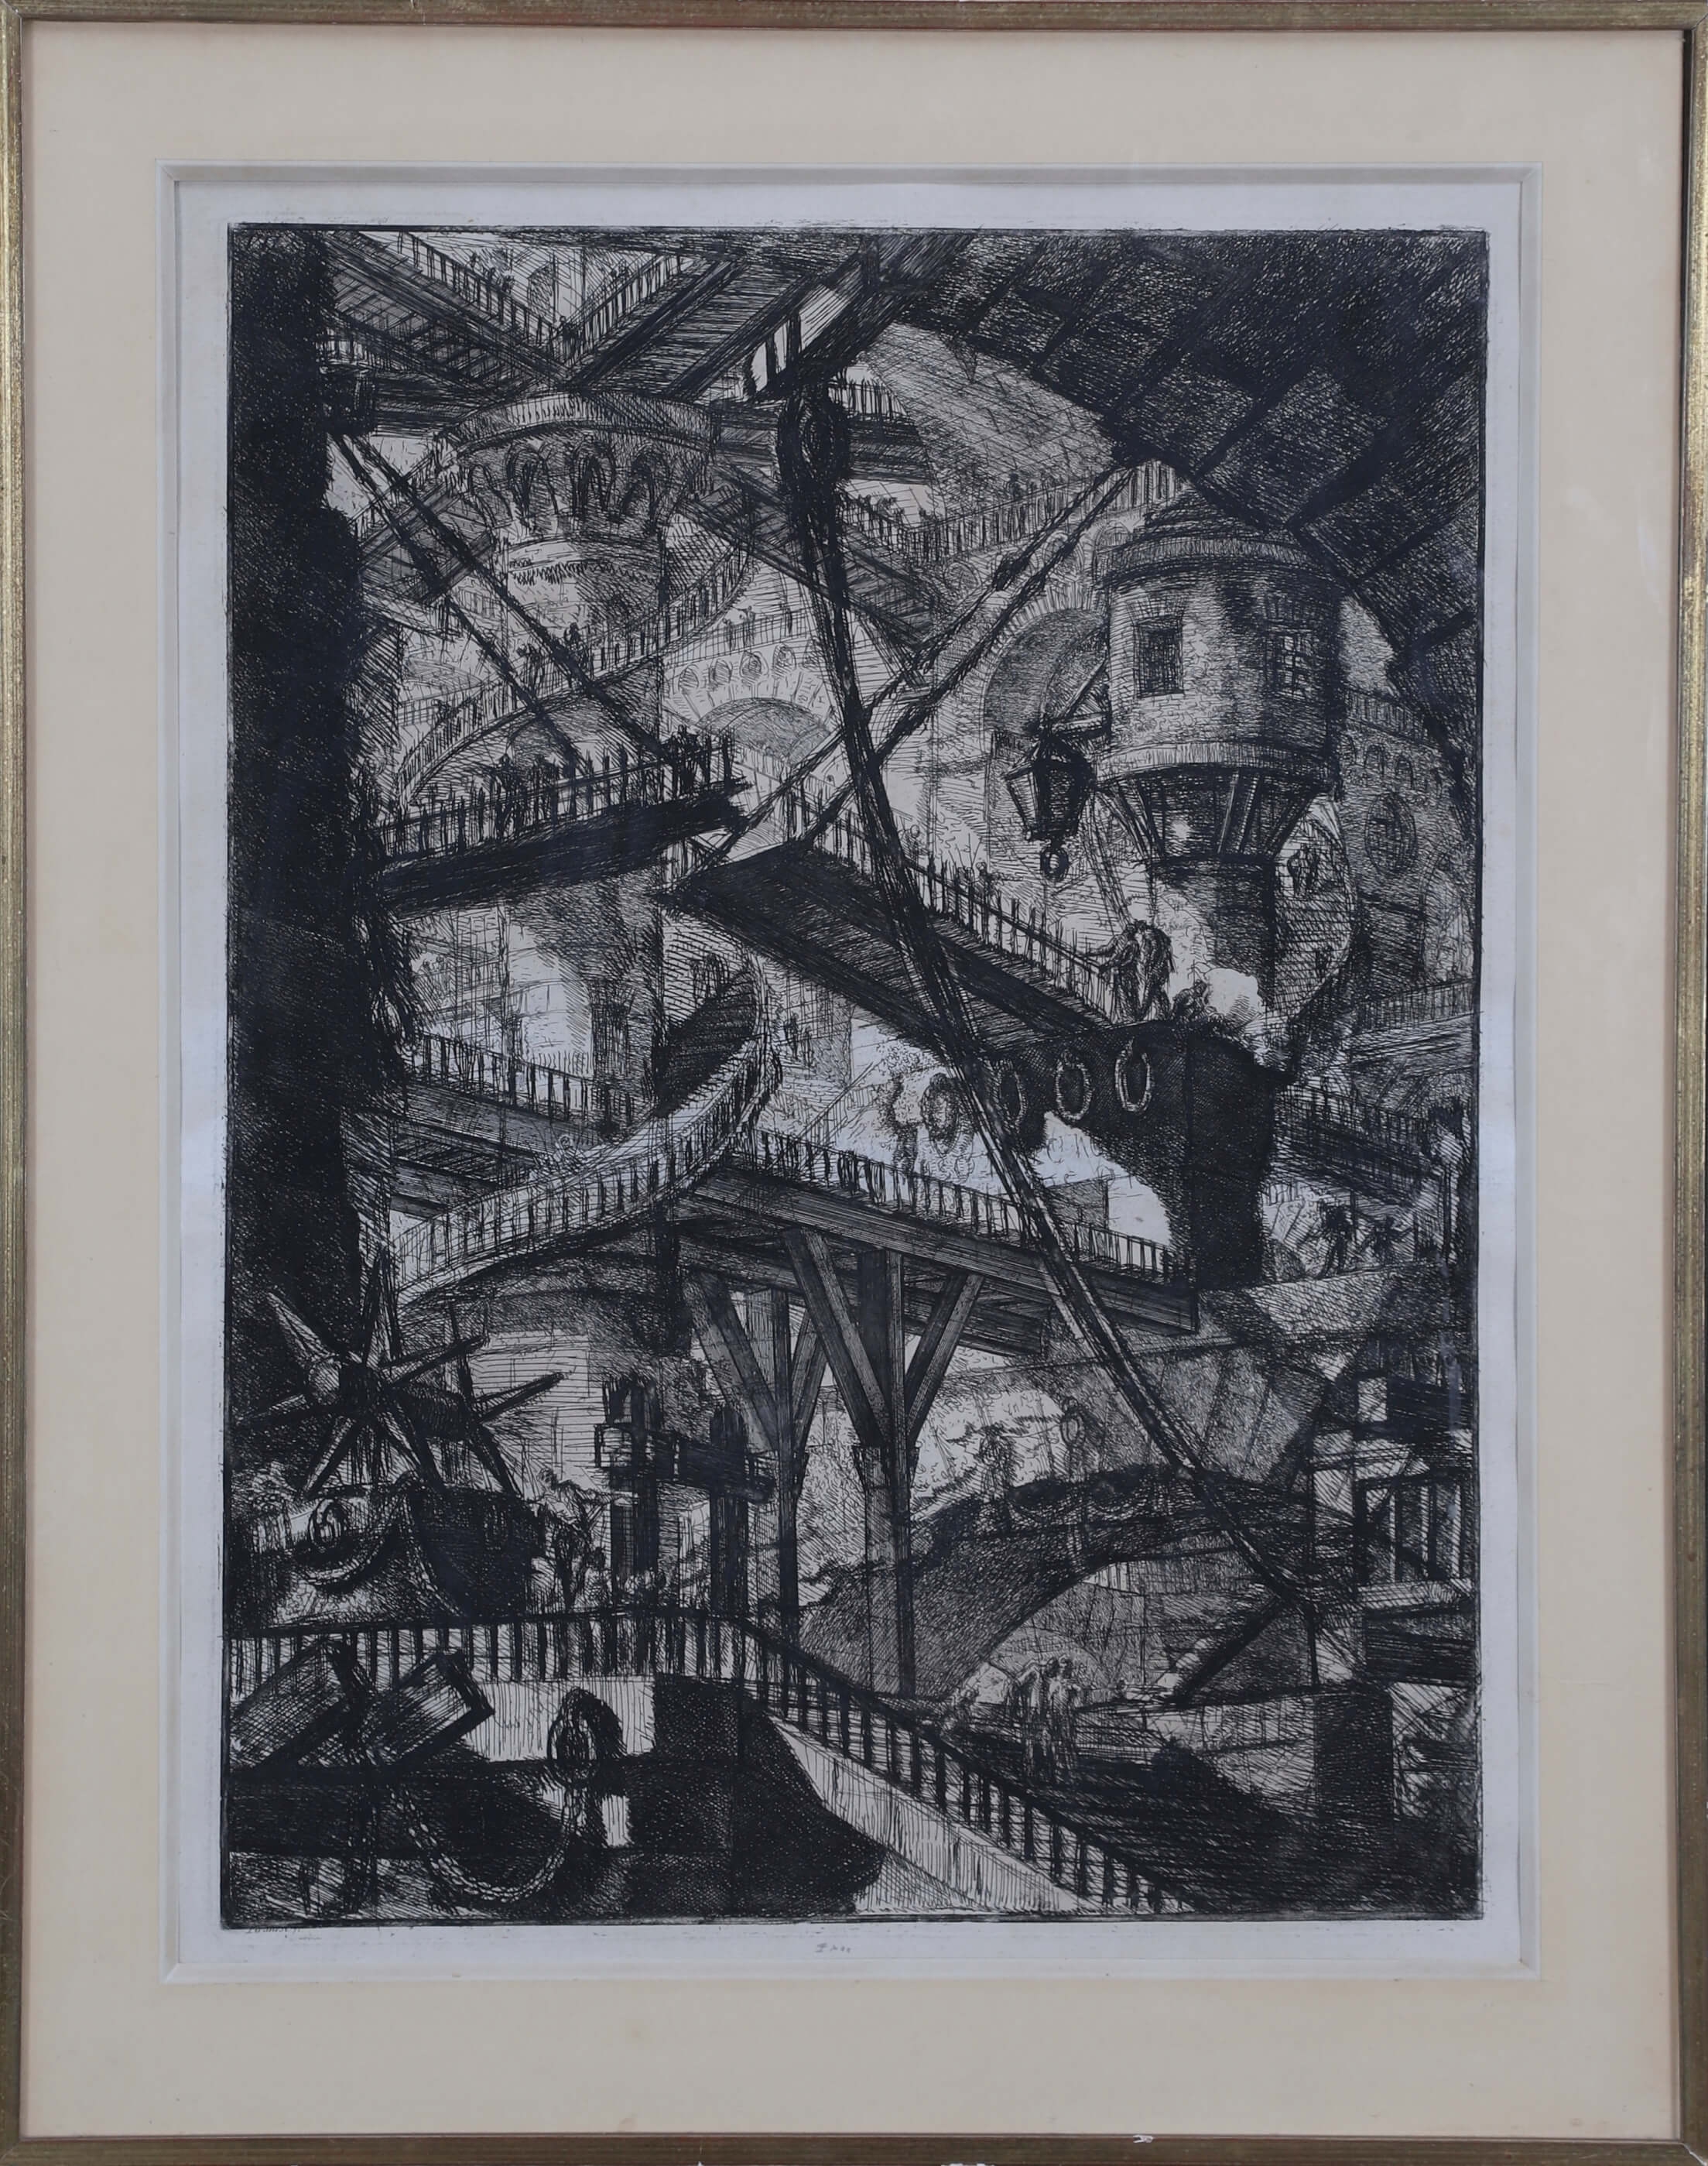 Artwork by Giovanni Battista Piranesi, Carceri d’Invenzione, planche VII, Le Pont-levis, Made of Etching on paper